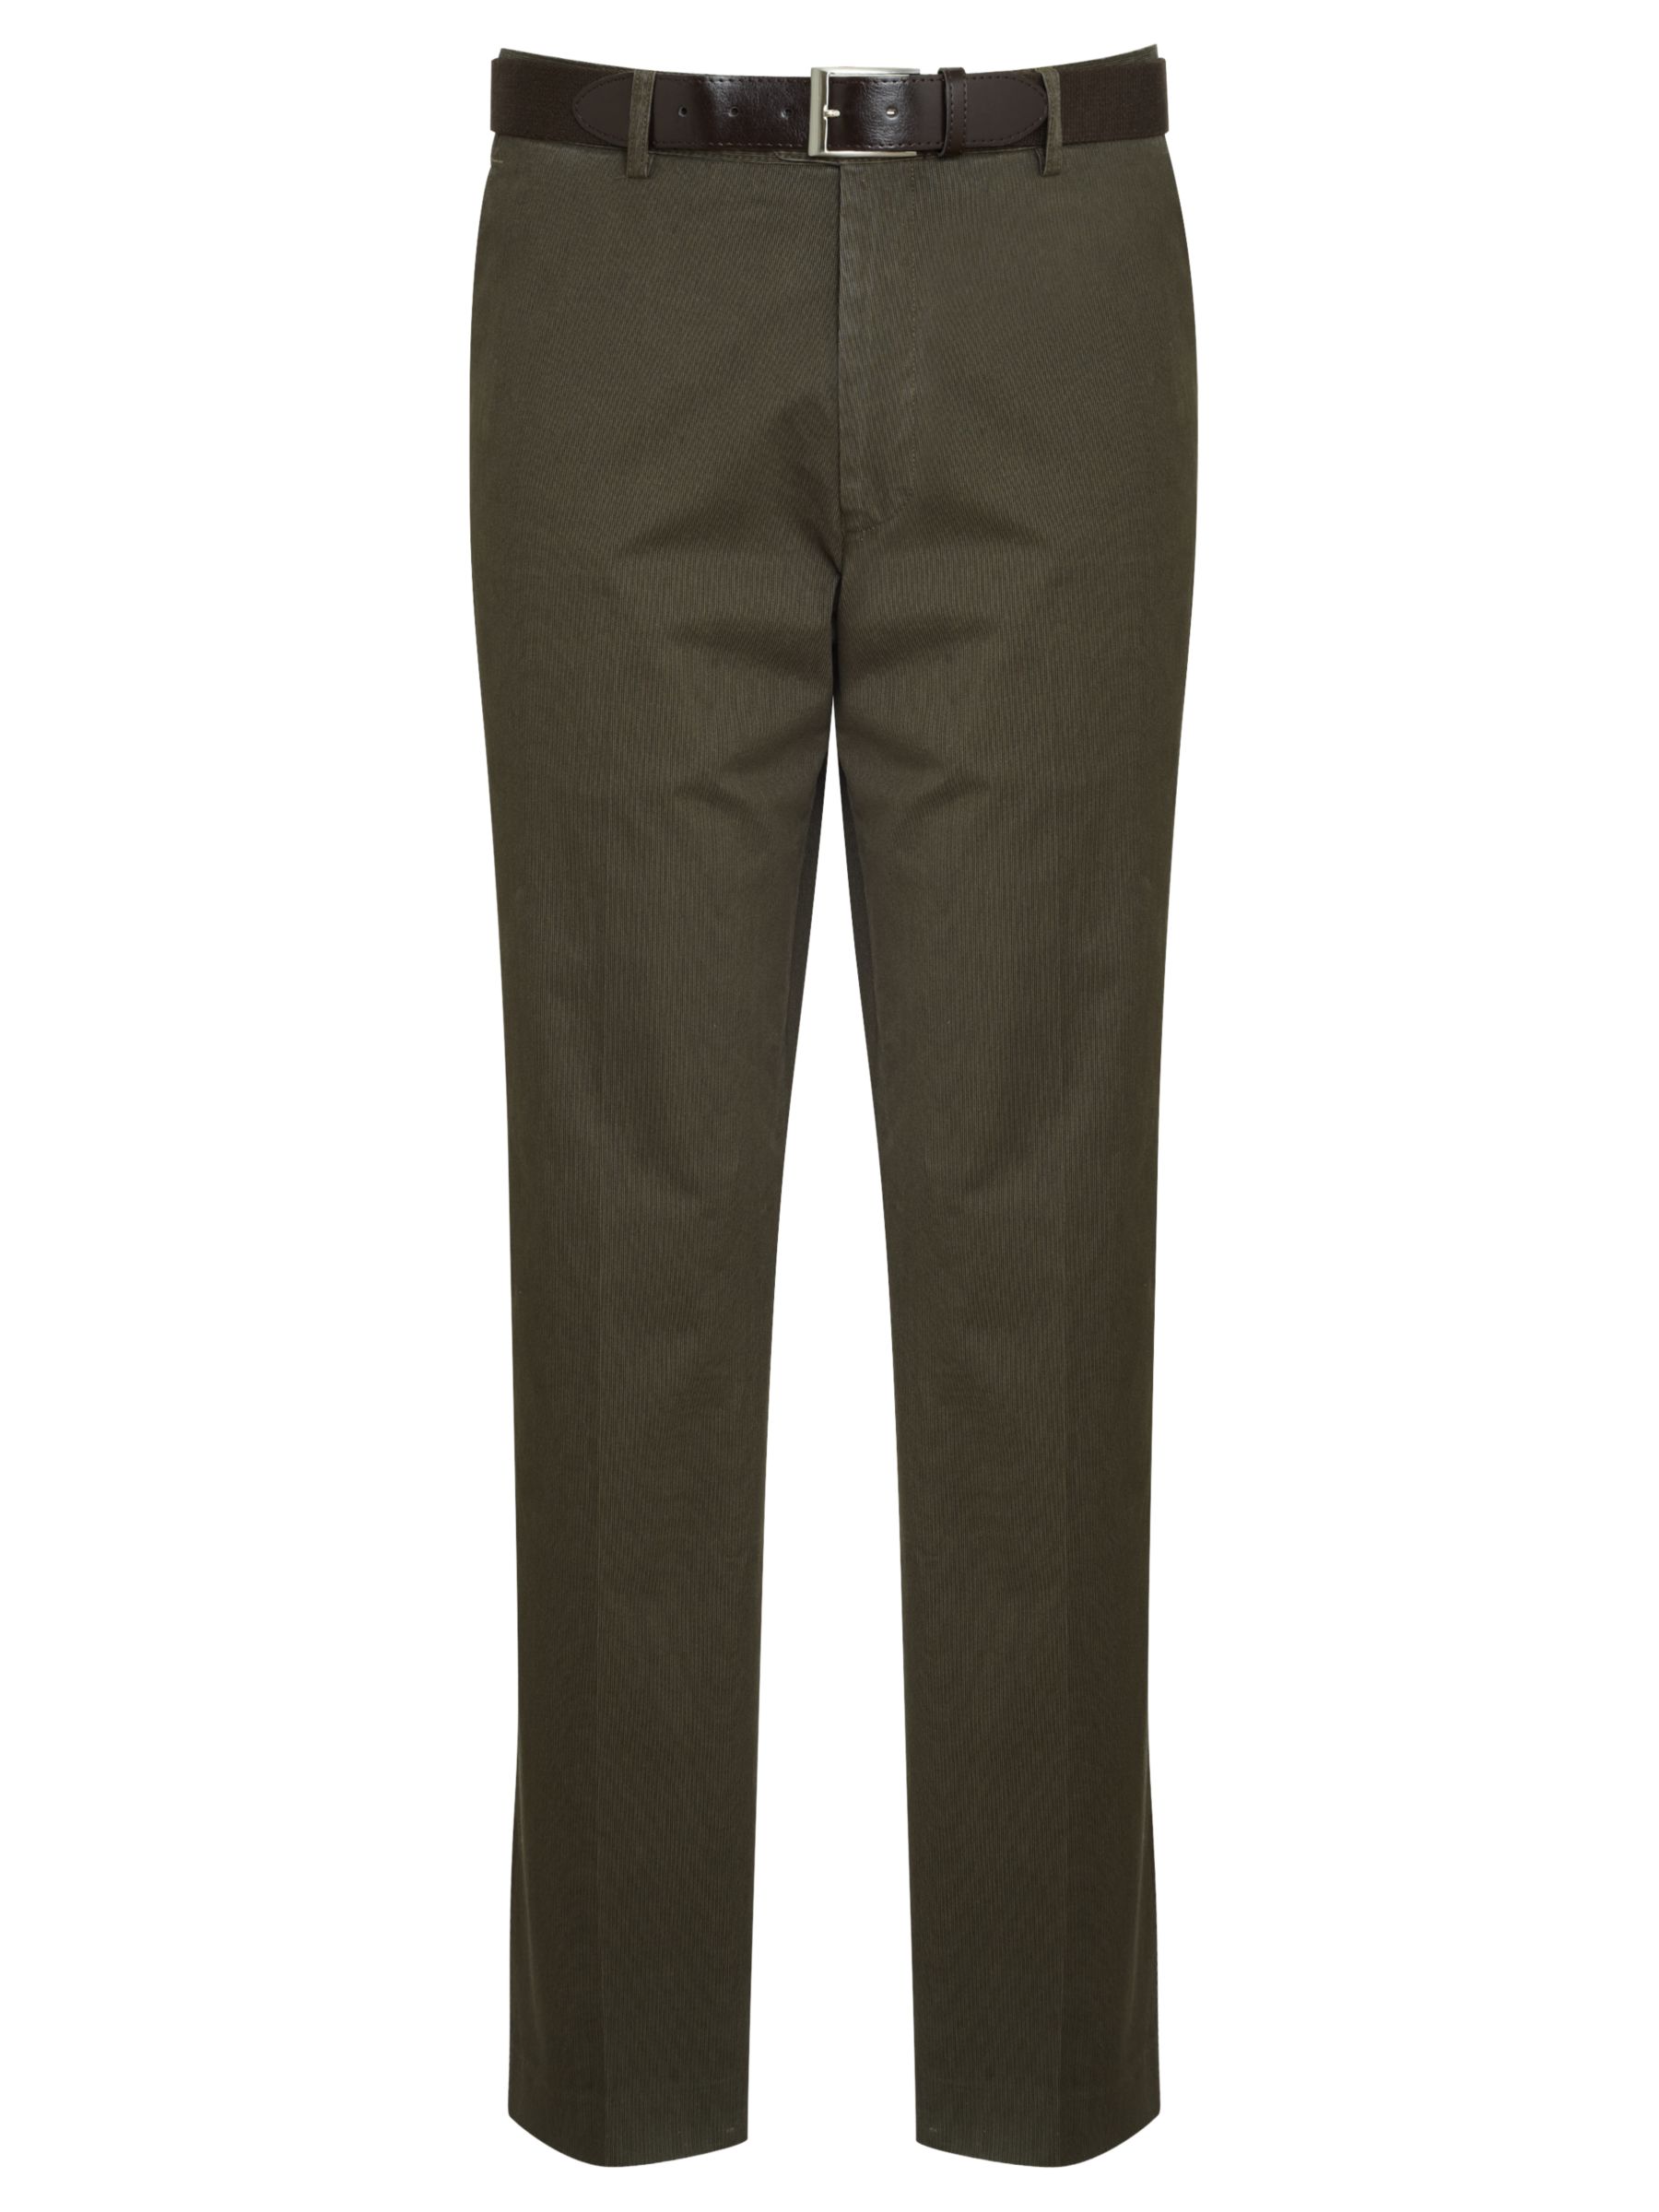 John Lewis & Partners Semi Formal Fine Stripe Stretch Trousers, Taupe